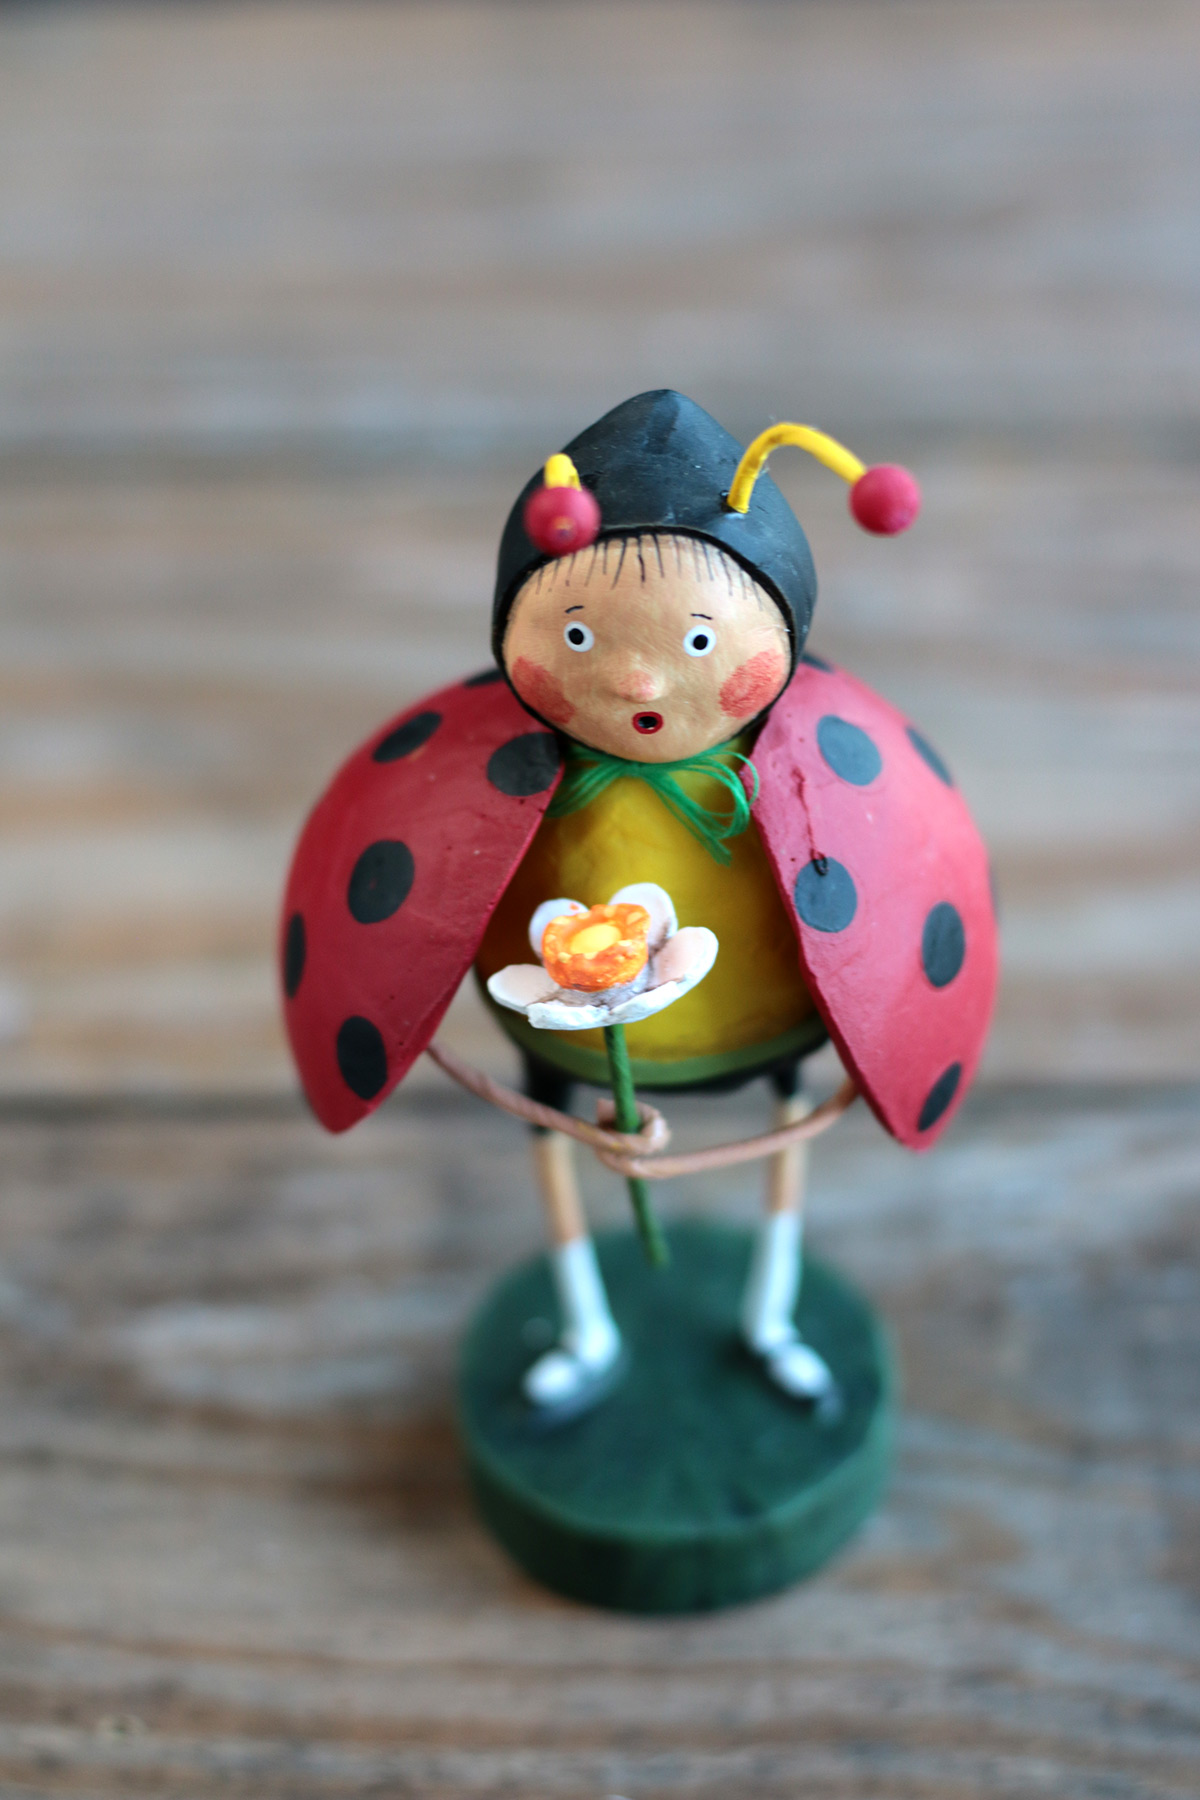 A Brand New Little Ladybug Lori Mitchell Spring Easter Figurine New 2019 Design